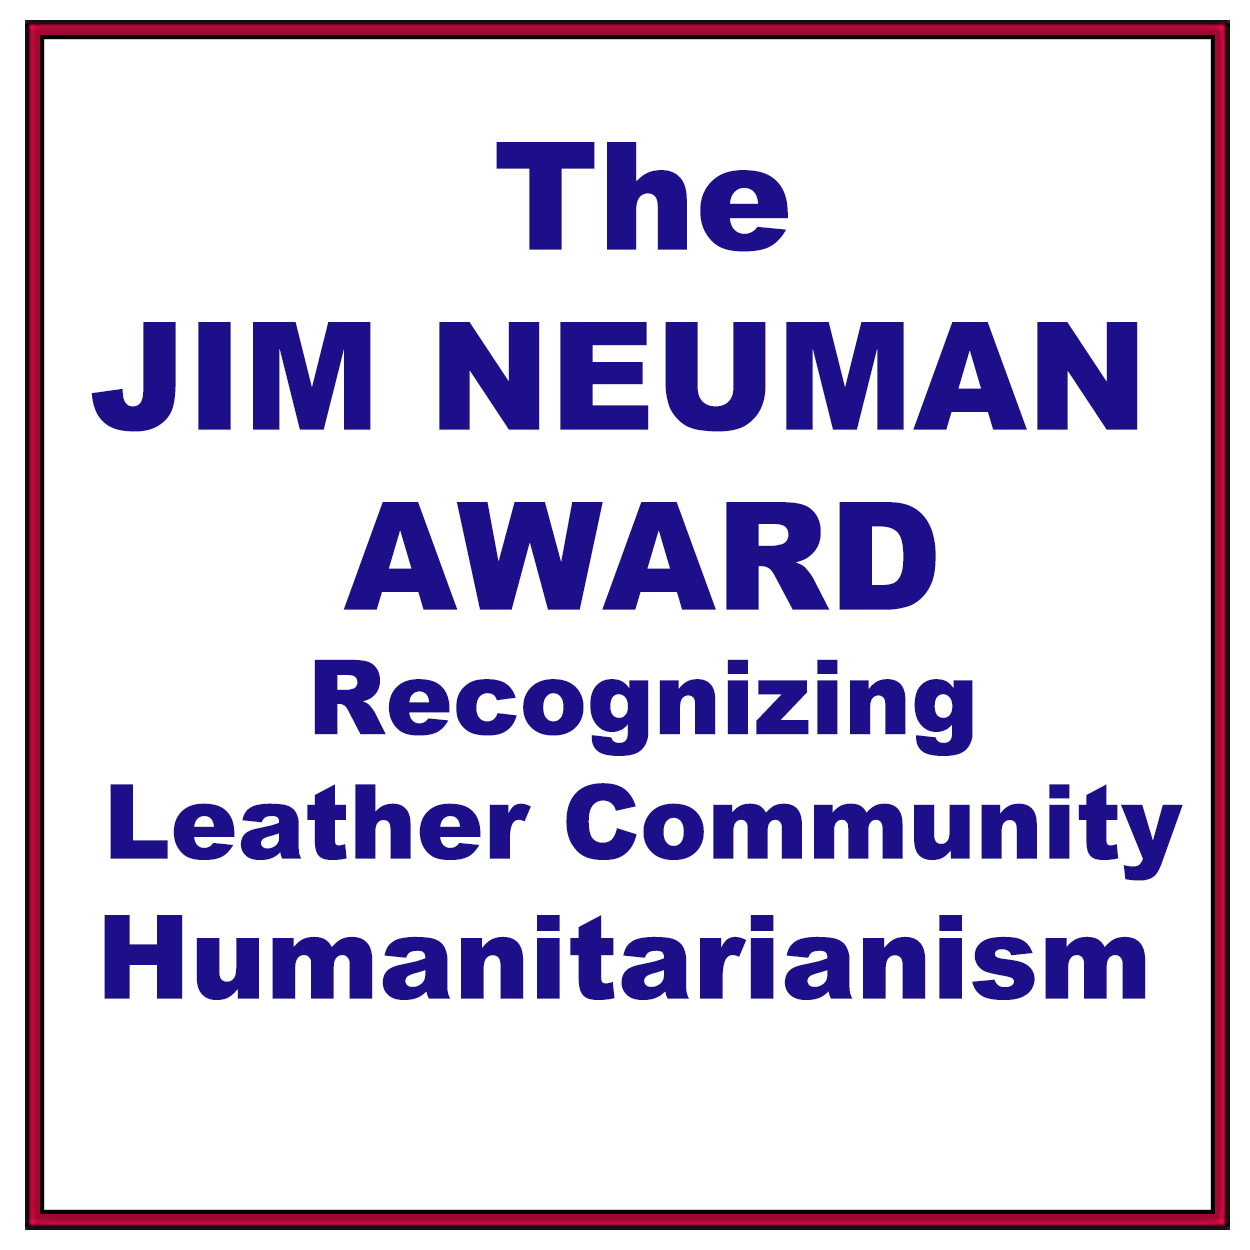 The Jim Neuman Humanitarian Award